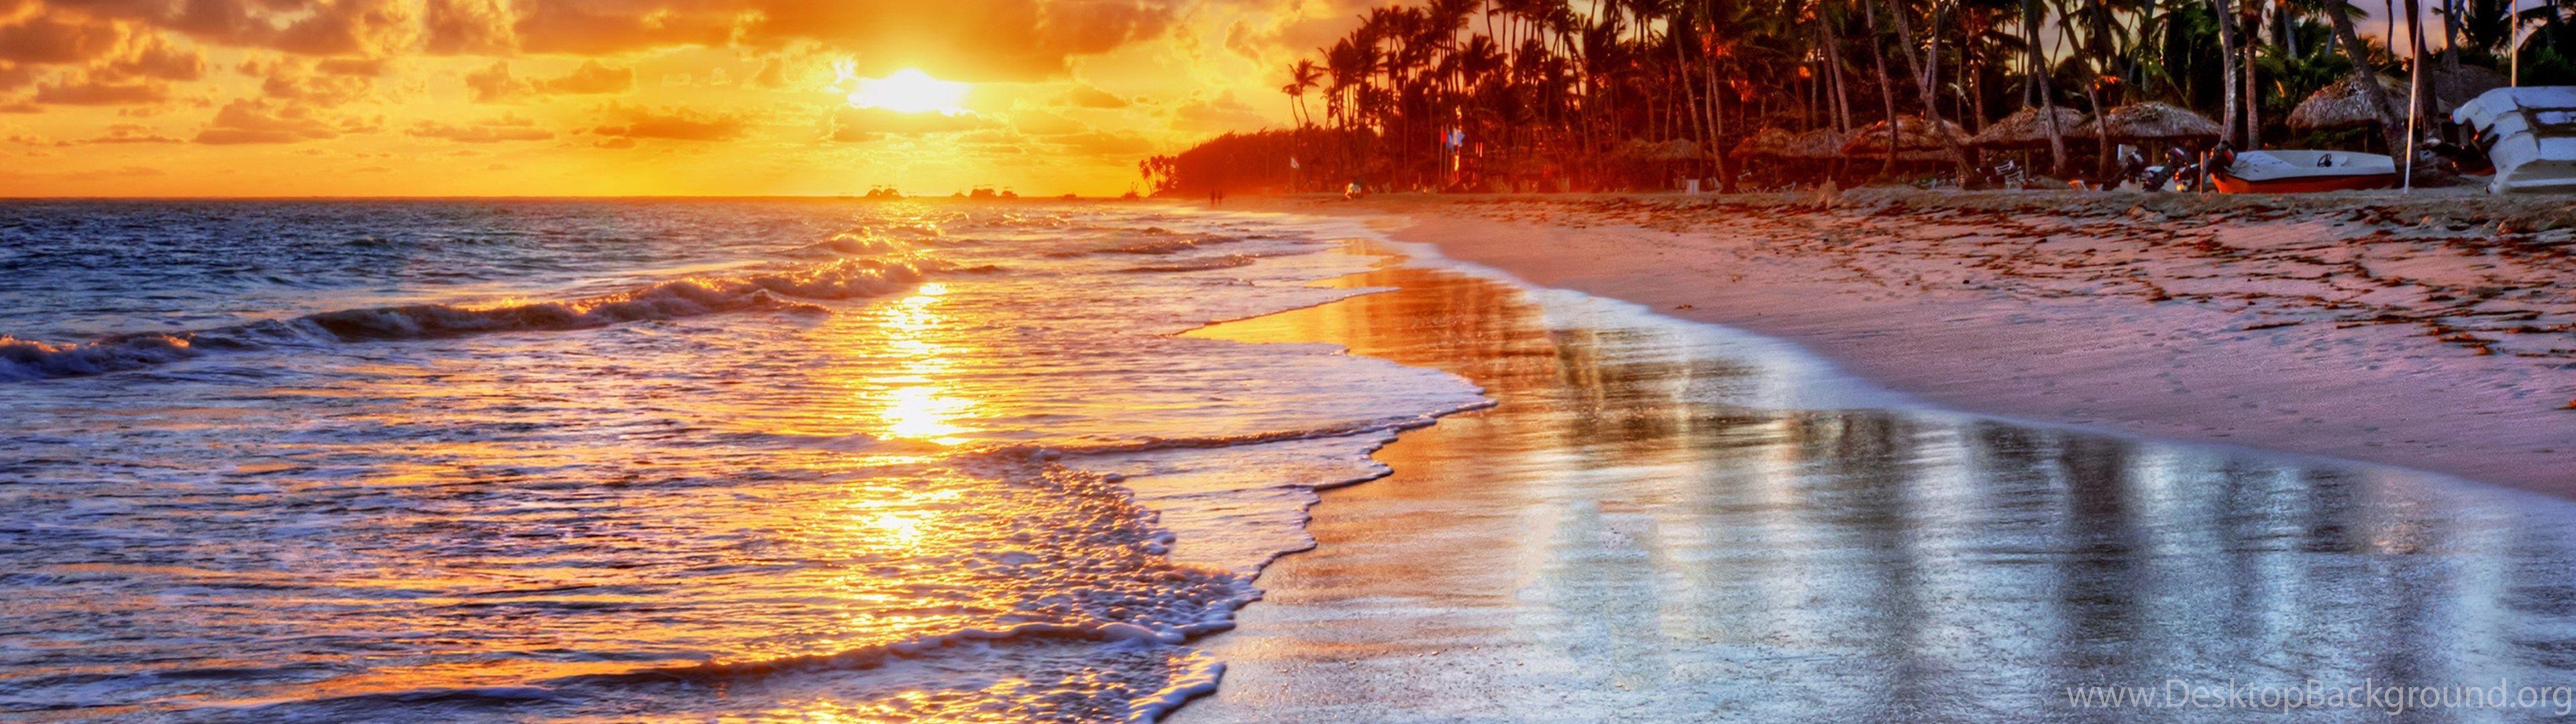 Beach Sunset Dual Screen Wallpapers - Top Free Beach Sunset Dual Screen